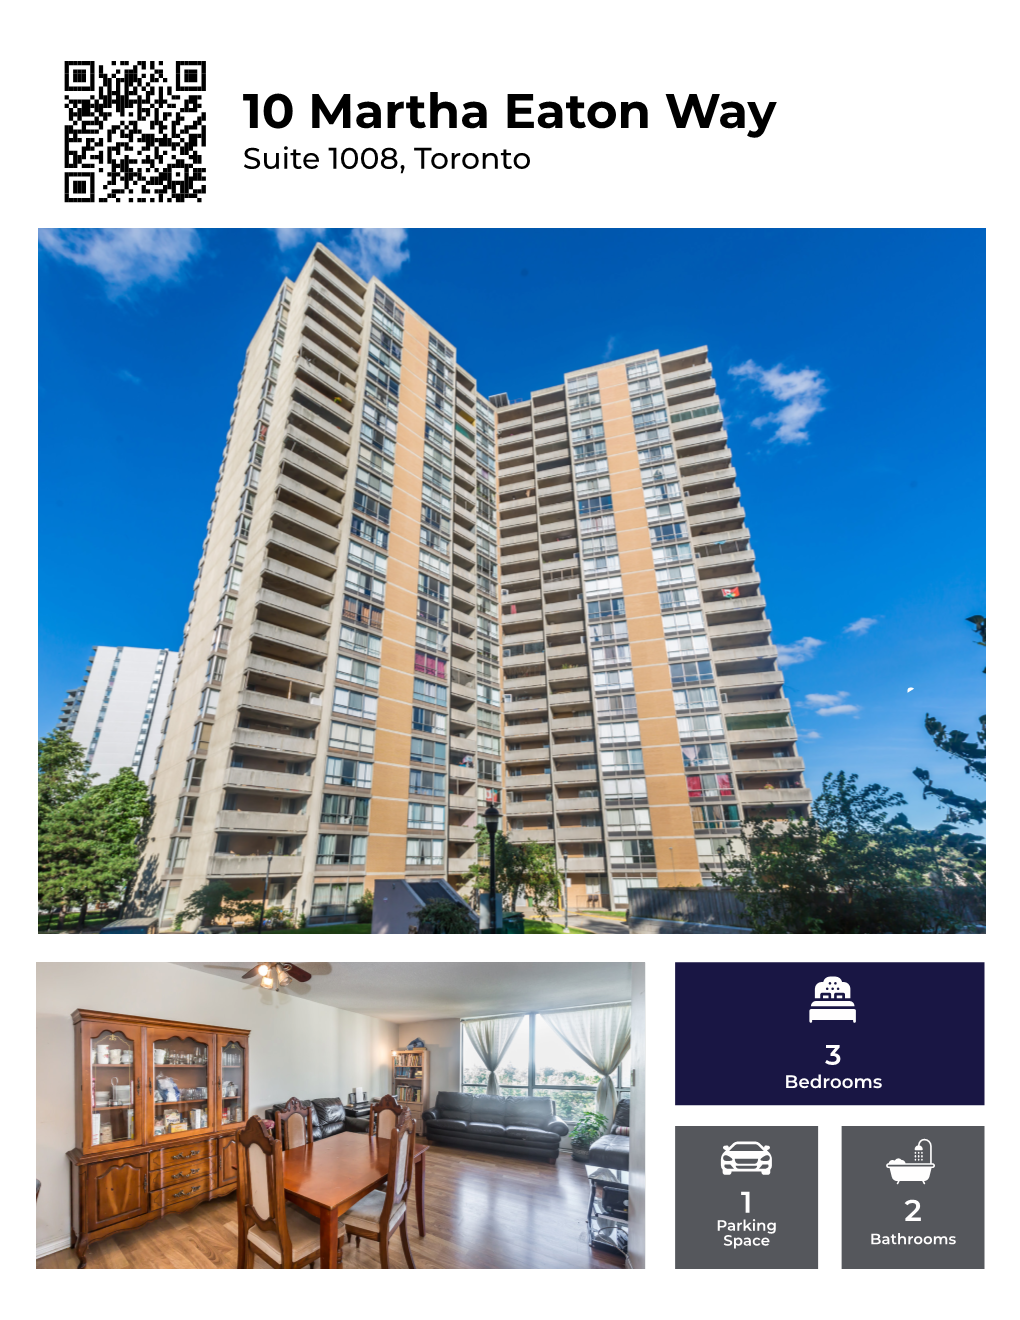 10 Martha Eaton Way Suite 1008, Toronto